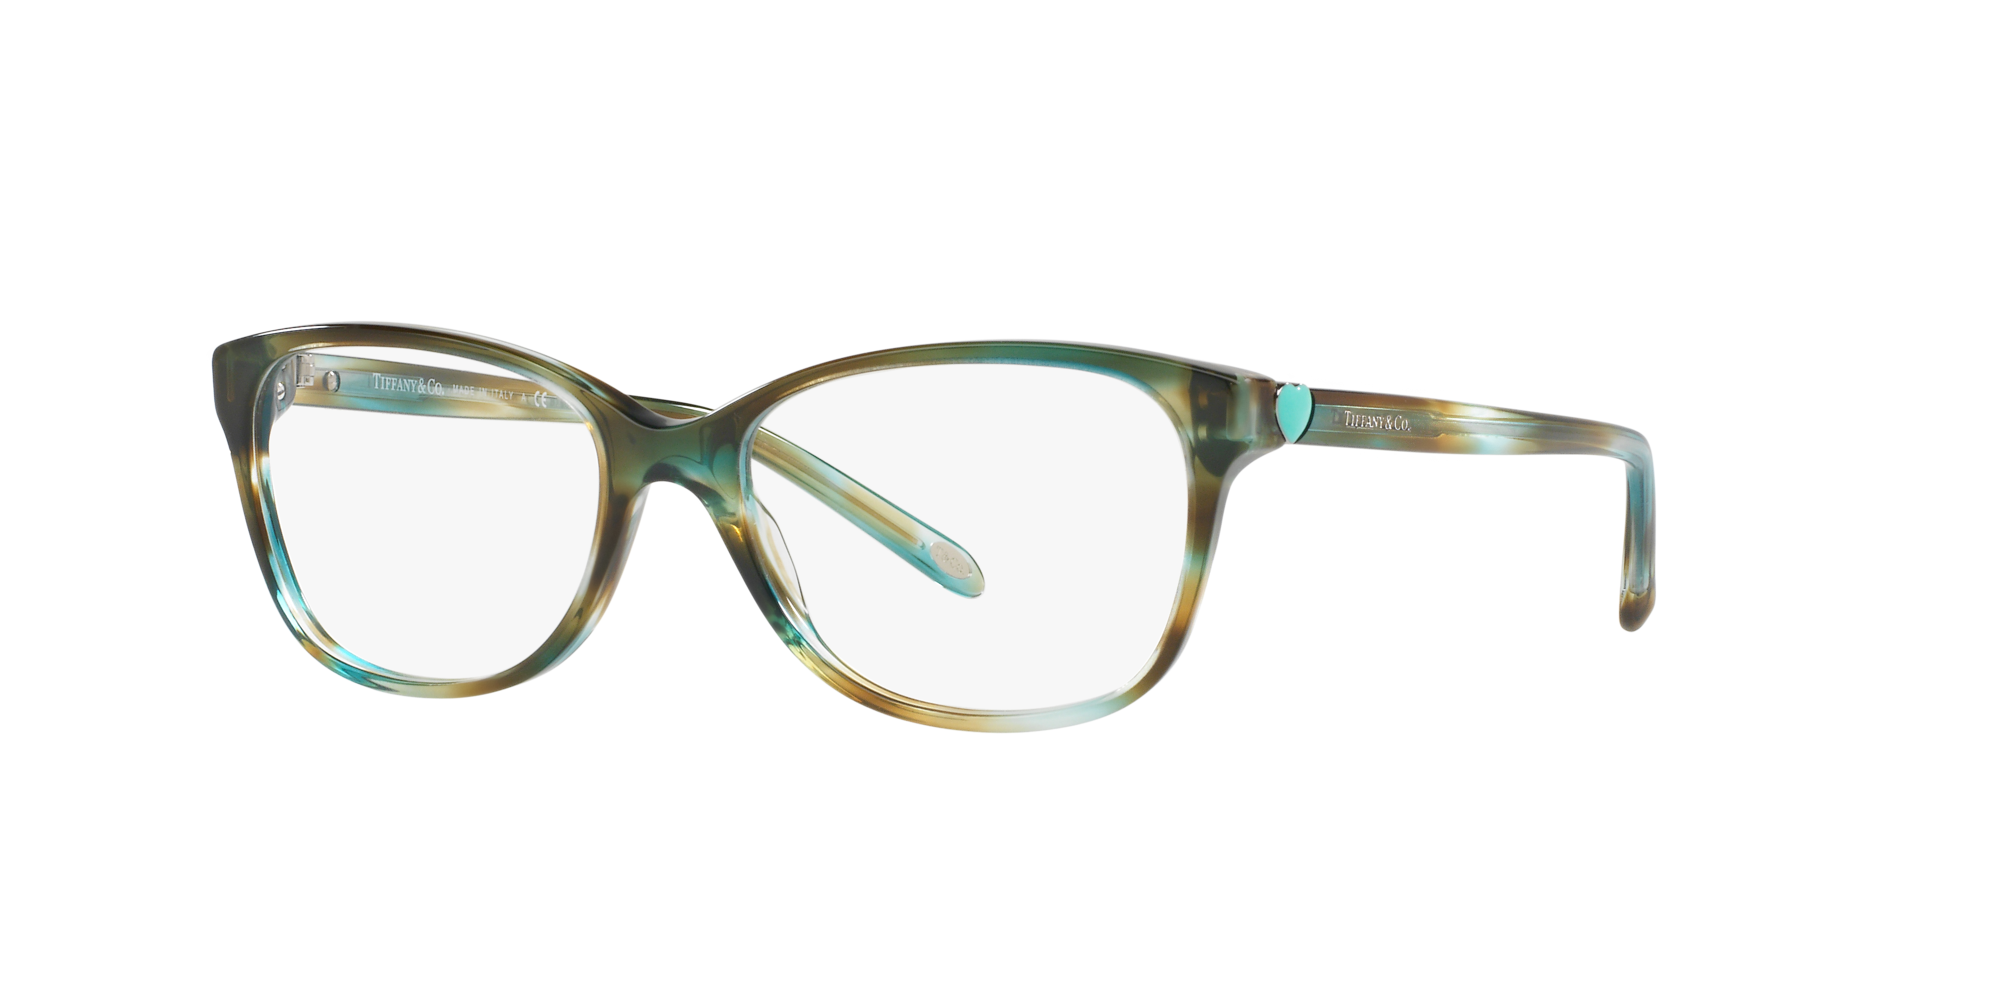 tiffany eyeglasses lenscrafters